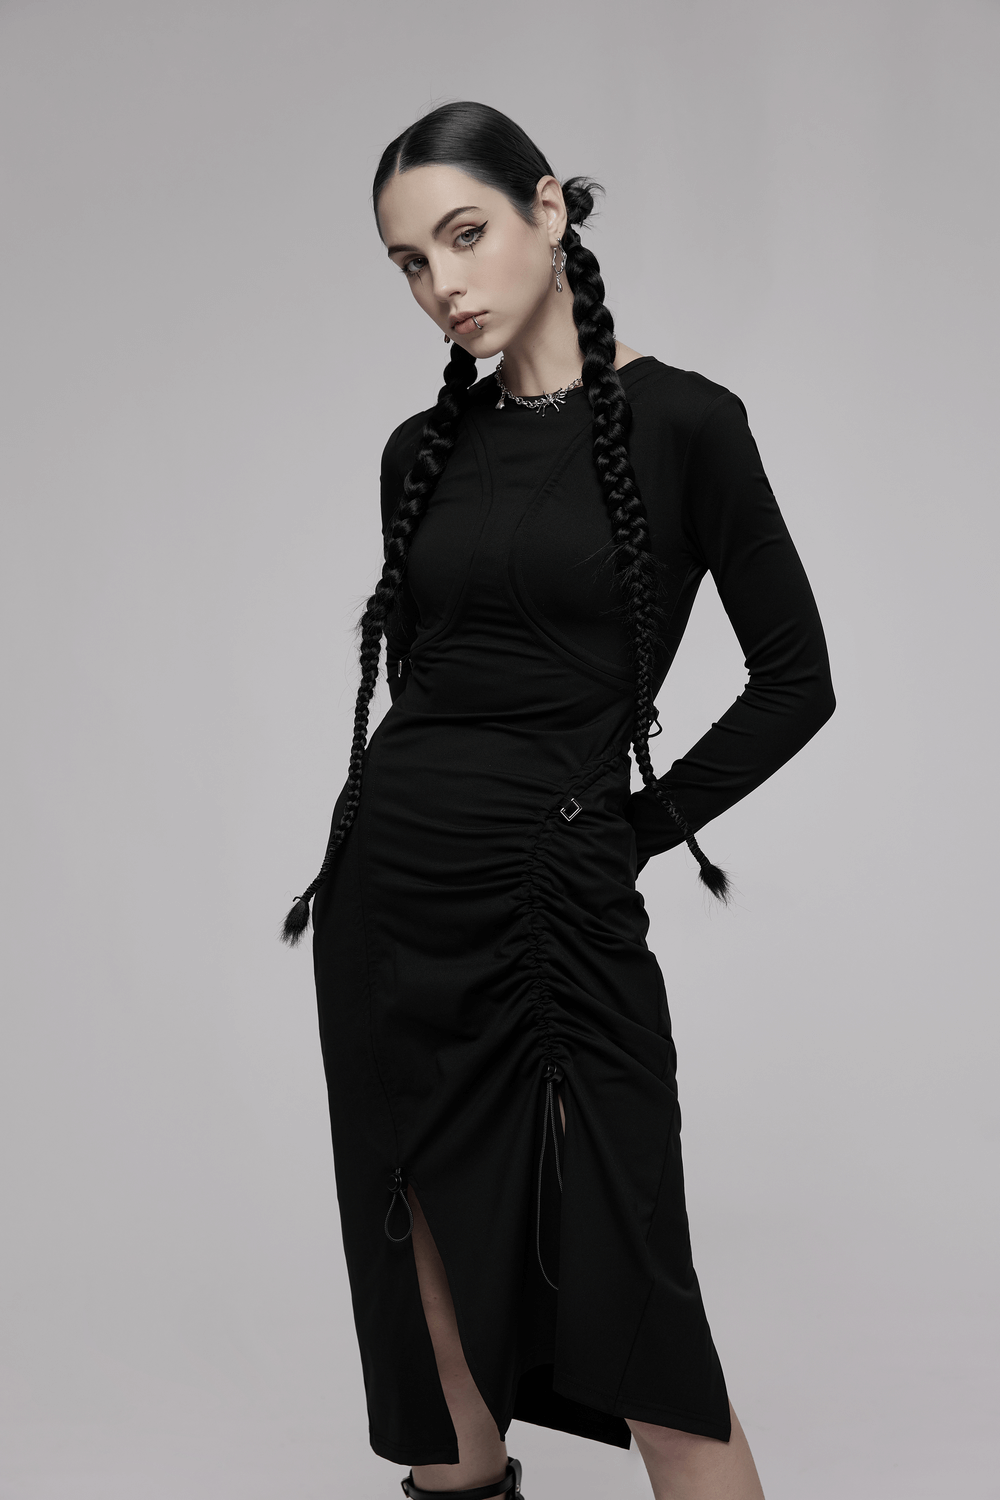 Adjustable Black Midi Dress with Reflective Detail - HARD'N'HEAVY